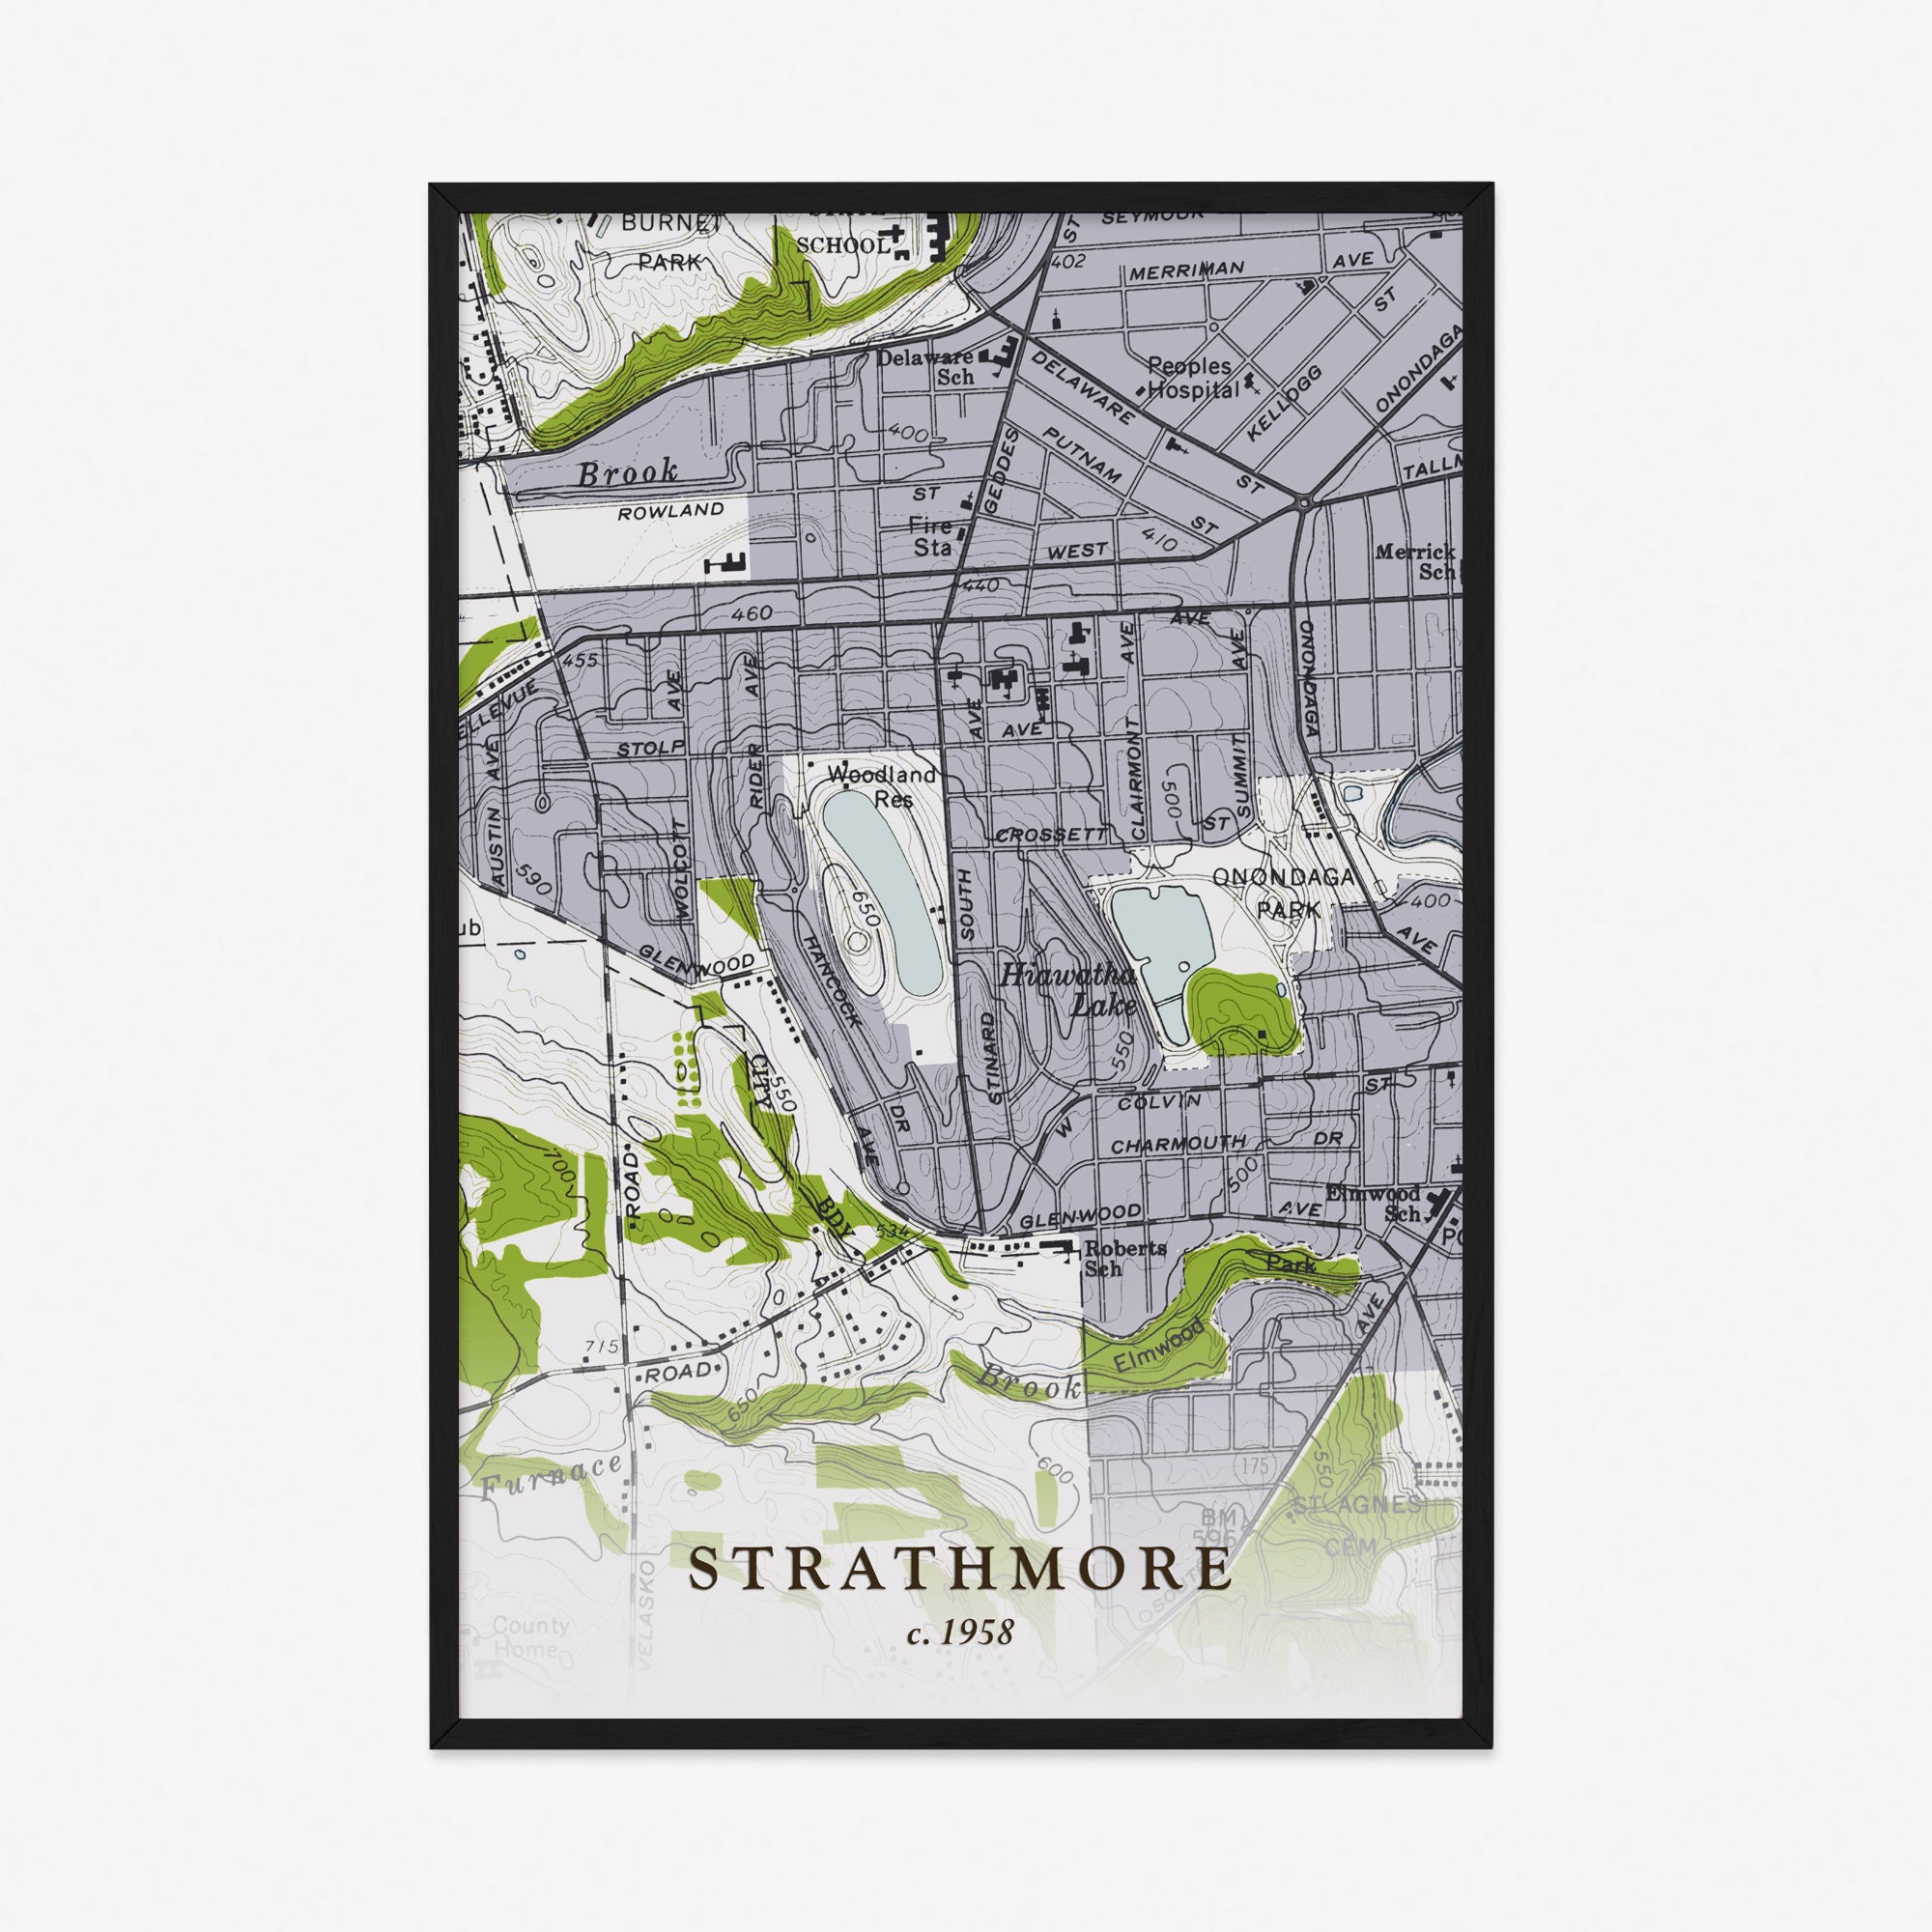 Strathmore Neighborhood, NY - 1958 Topographic Map